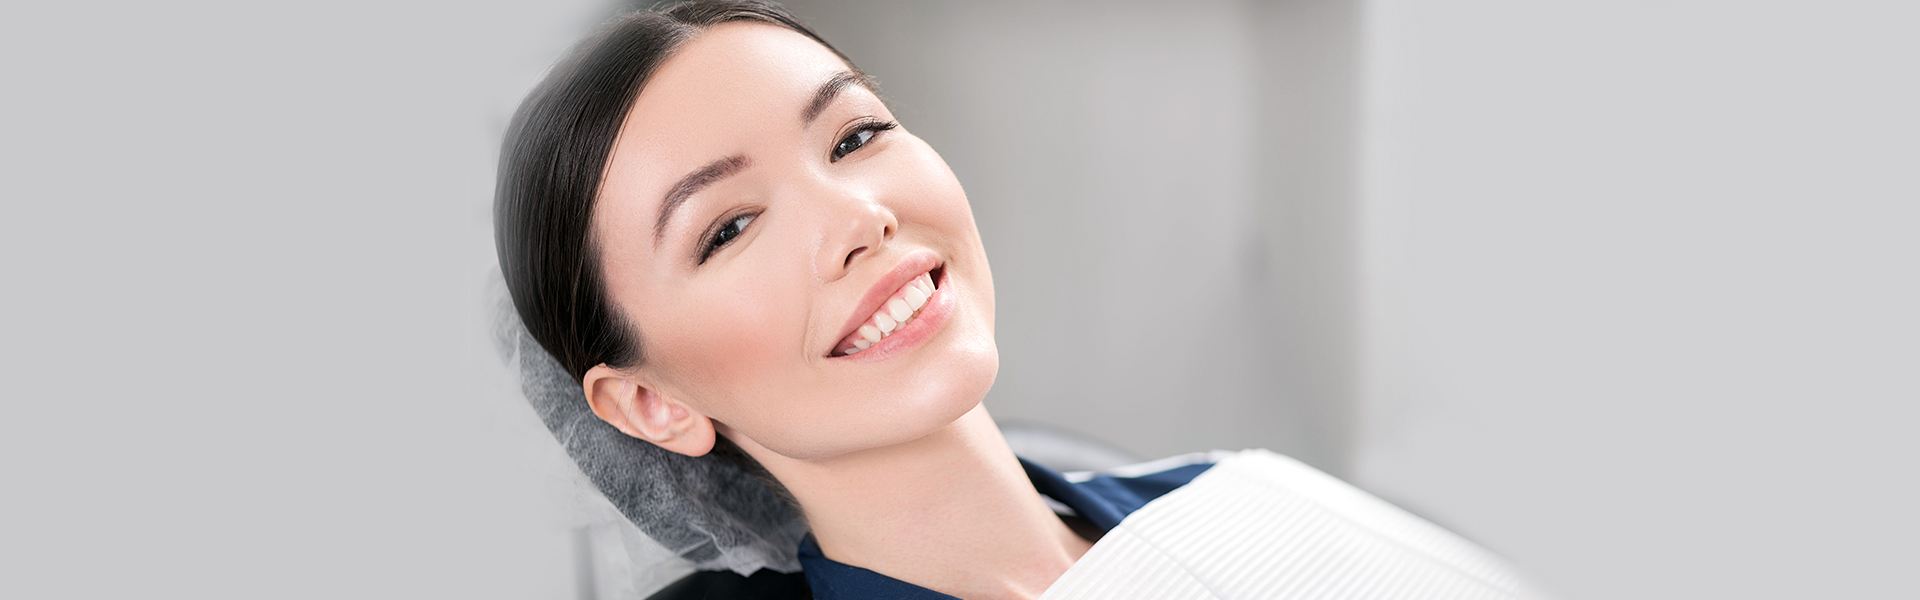 Four Reasons to Choose Dental Implants Over Bridges or Dentures